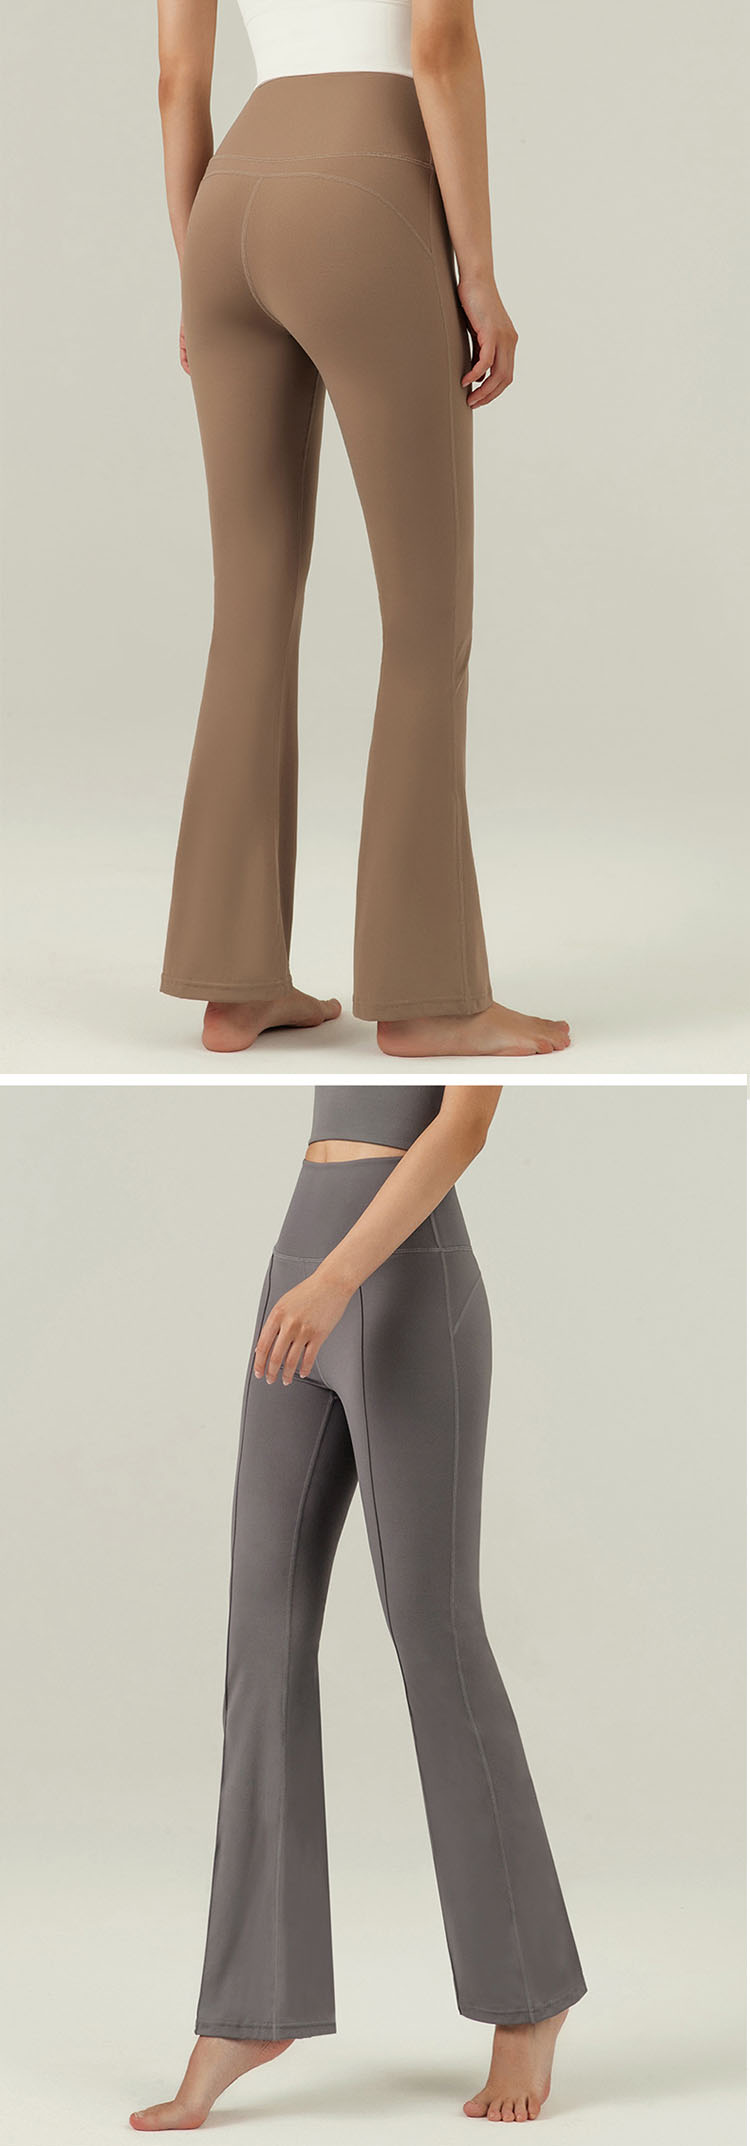 The trouser leg has a slim fit design, which modifies the leg line